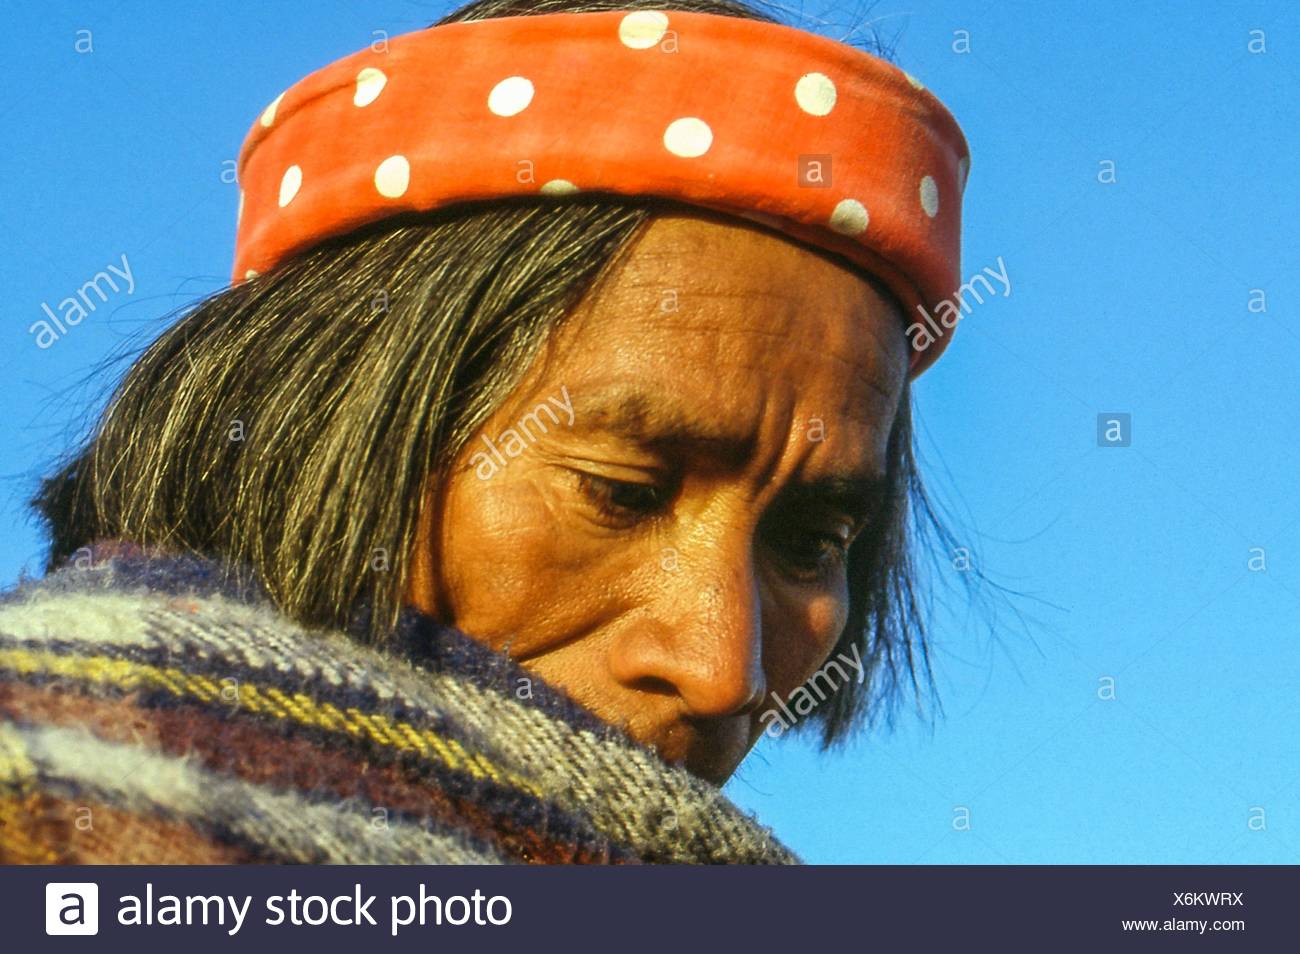 Los Tarahumaras O Comunidades De Raramuris Son Un Grupo Etnico Que Vive En La Sierra Tarahumara De Chihuahua Mexico Fotografia De Stock Alamy